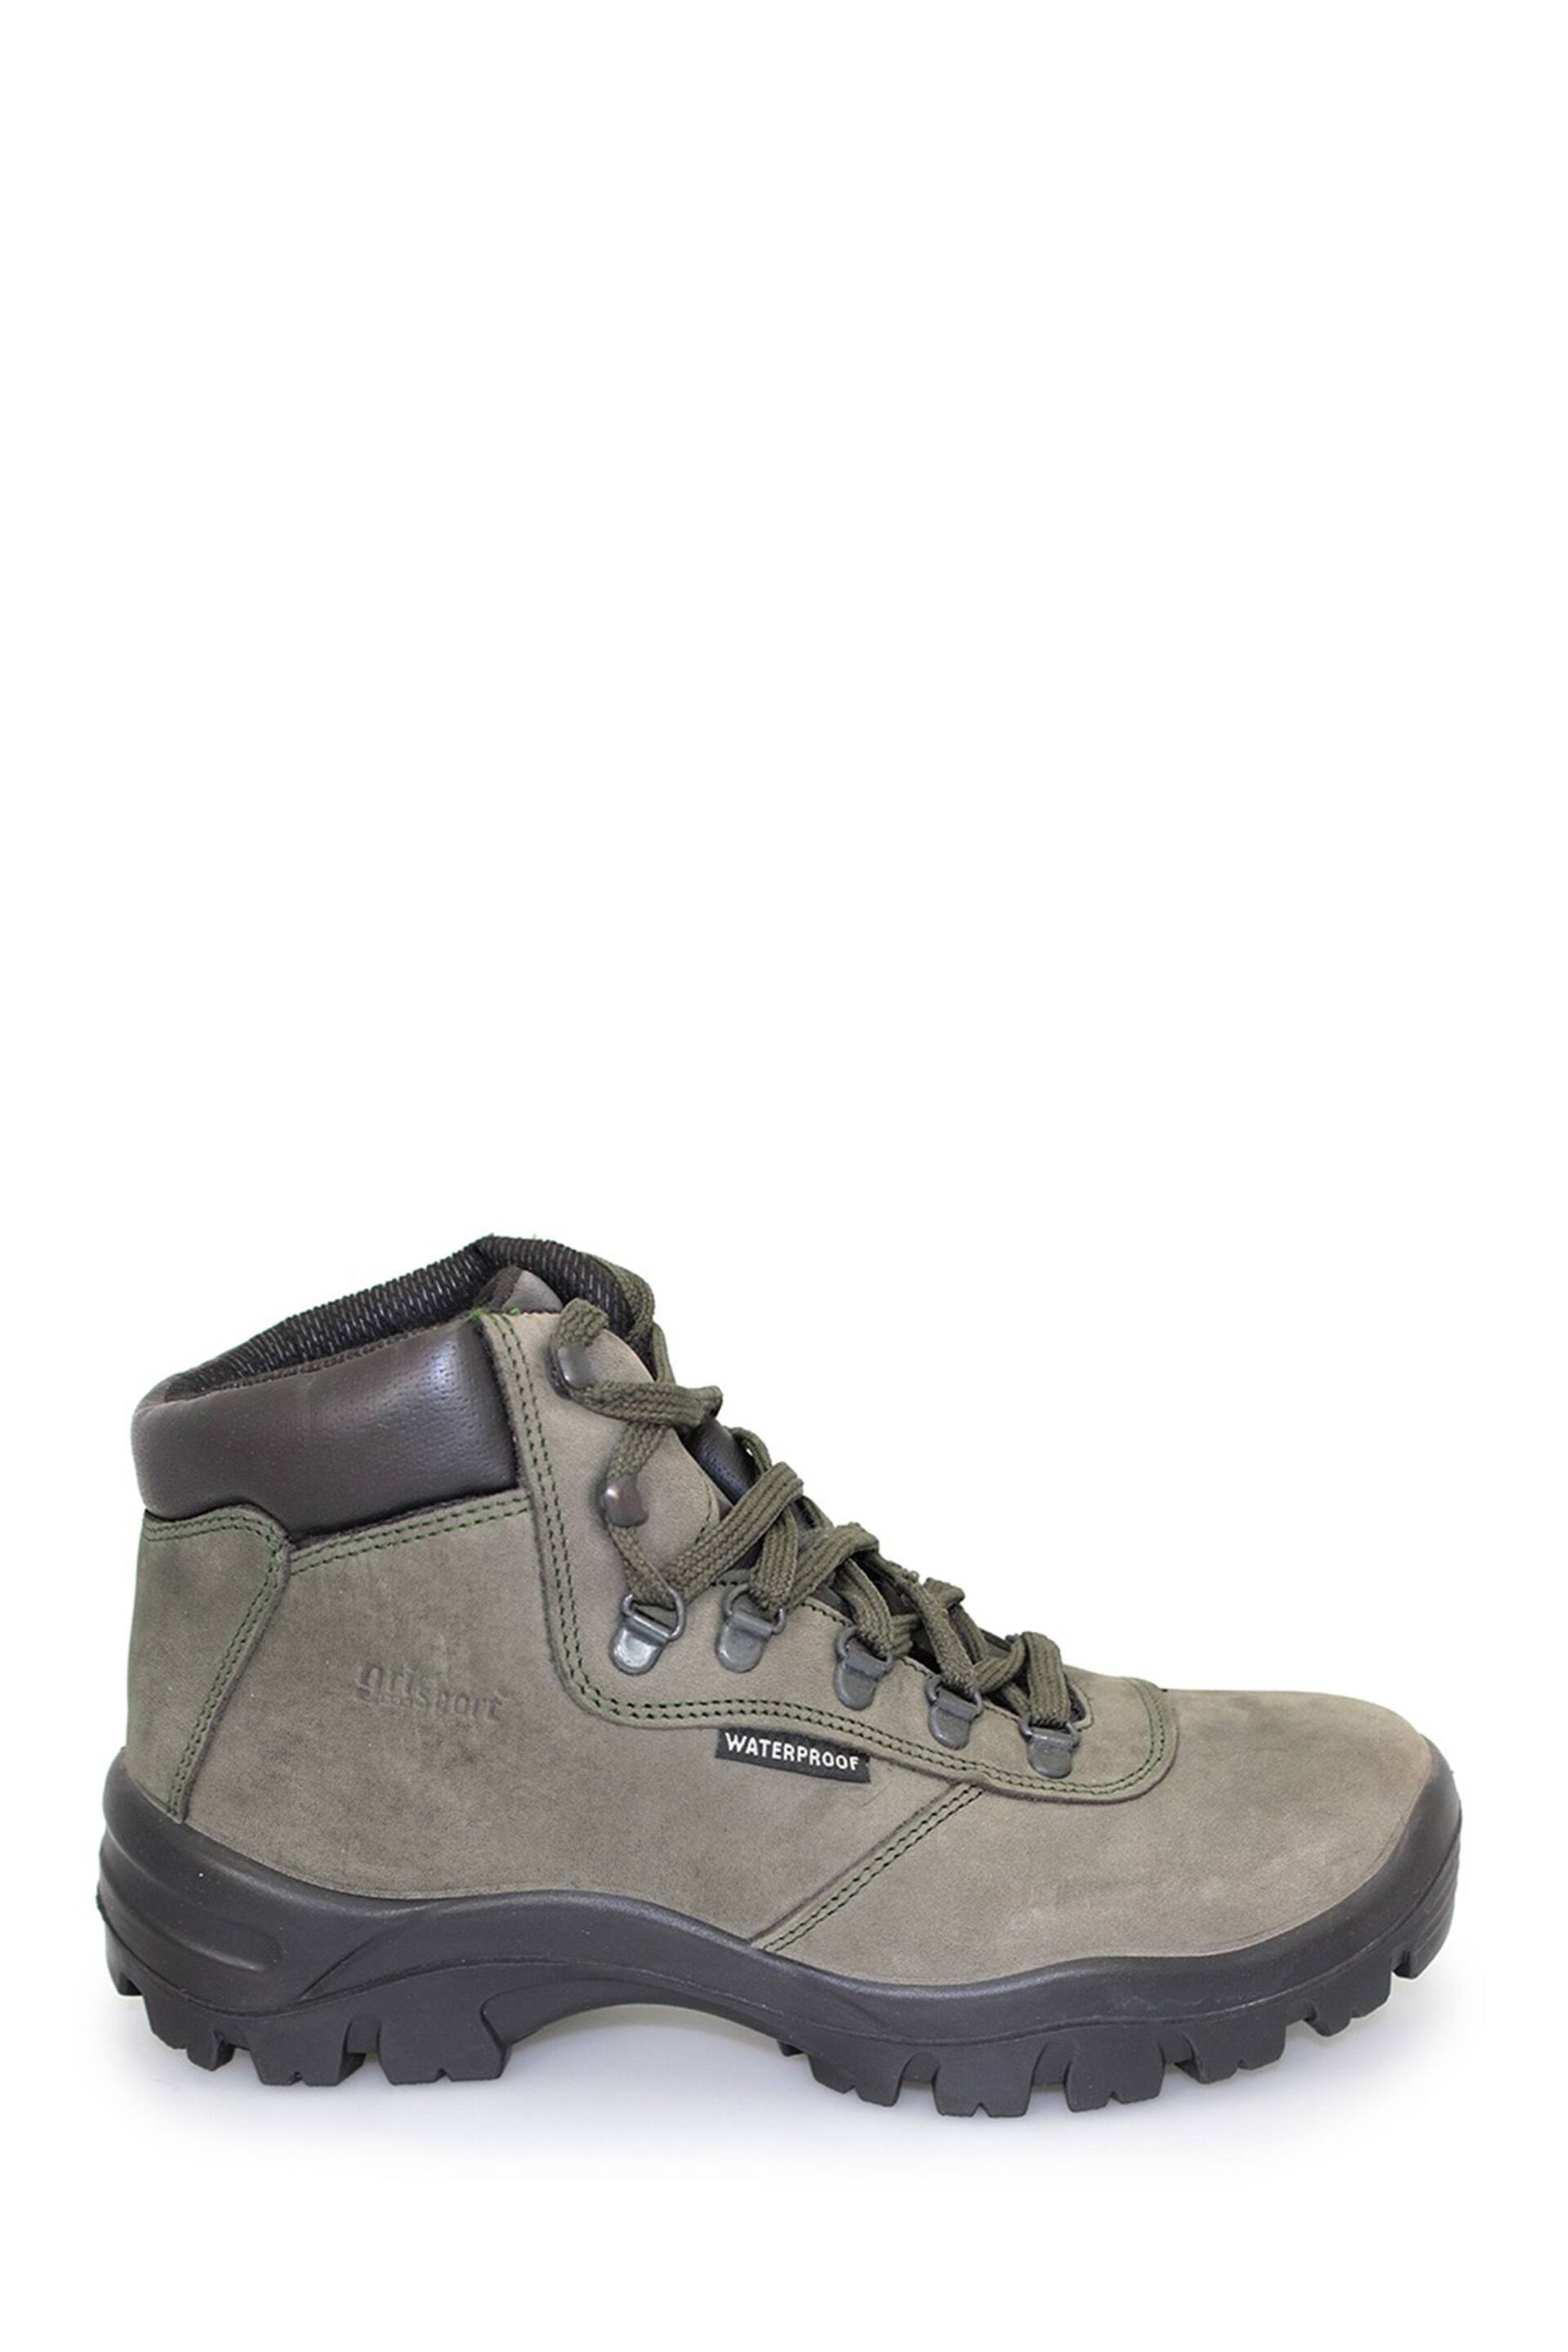 Grisport Green Glencoe Walking Boots - Image 1 of 2